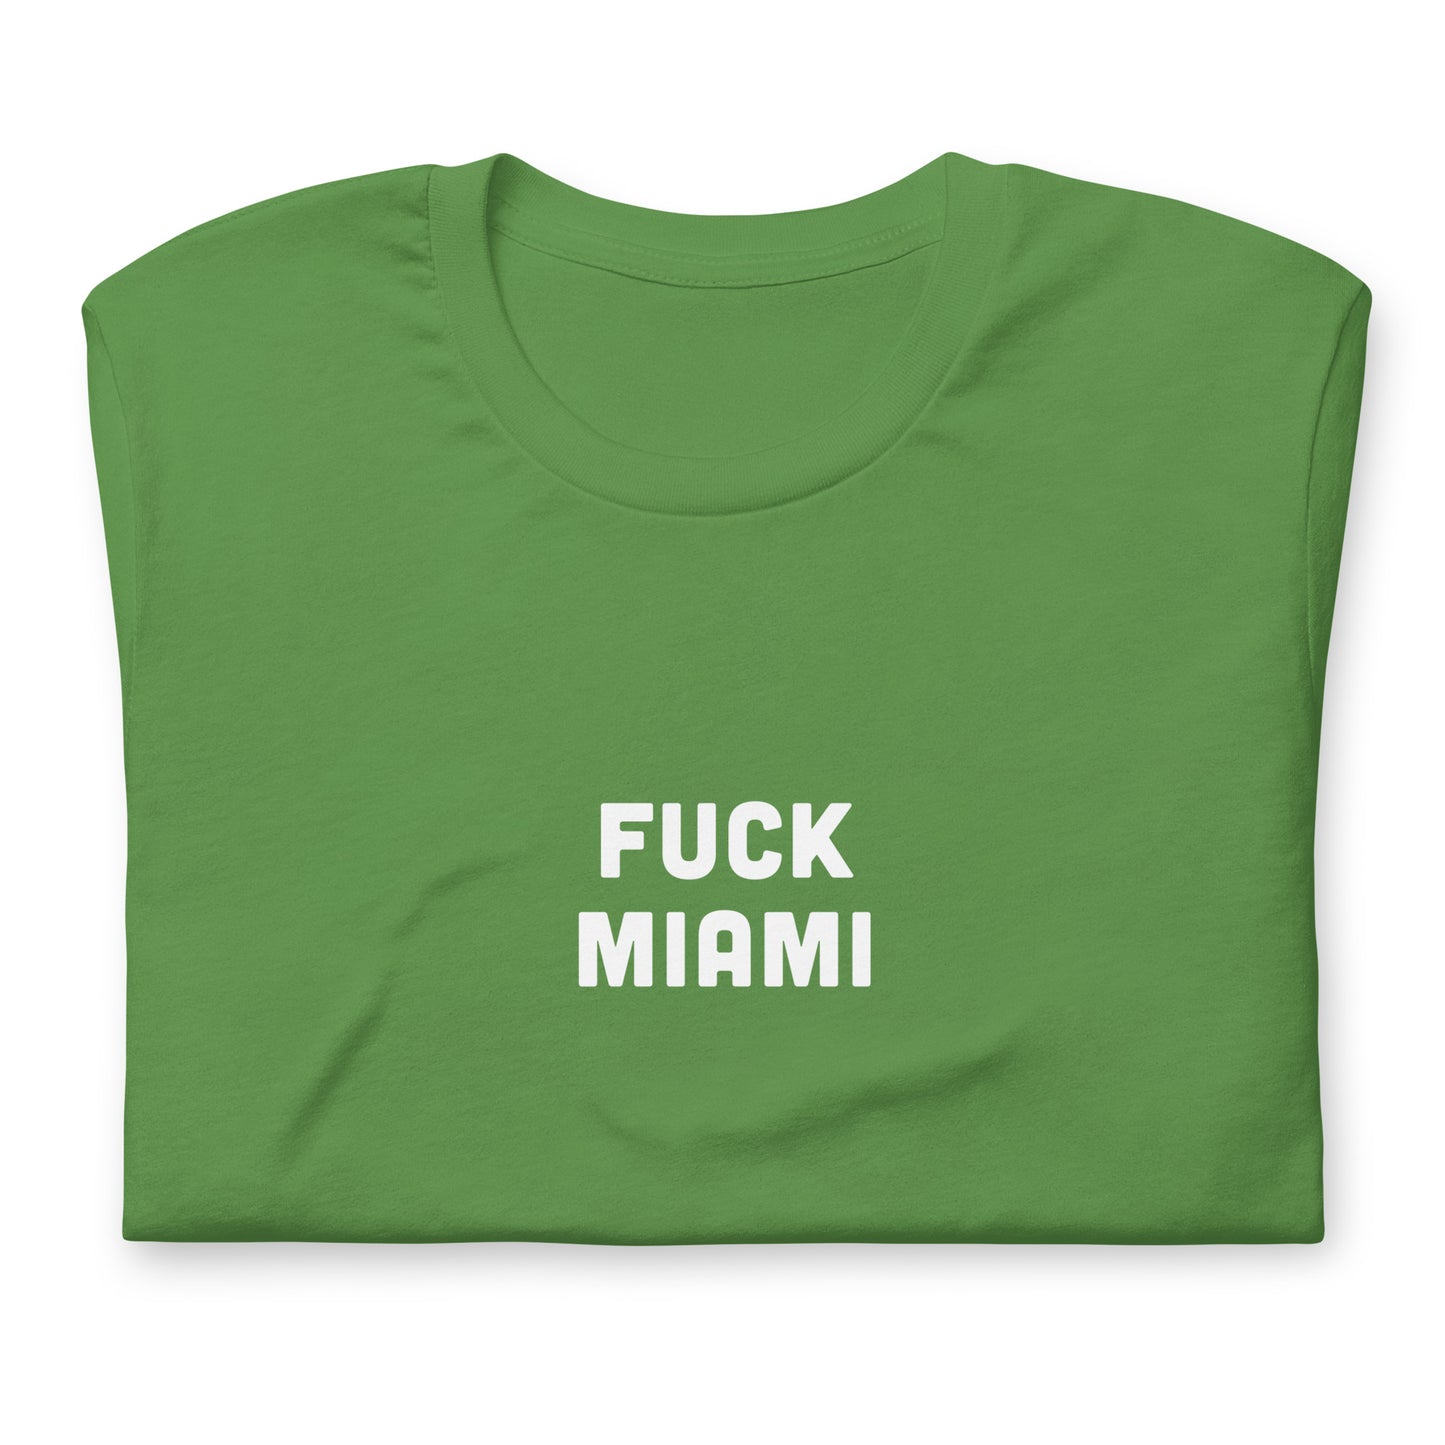 Fuck Miami T-Shirt Size M Color Black